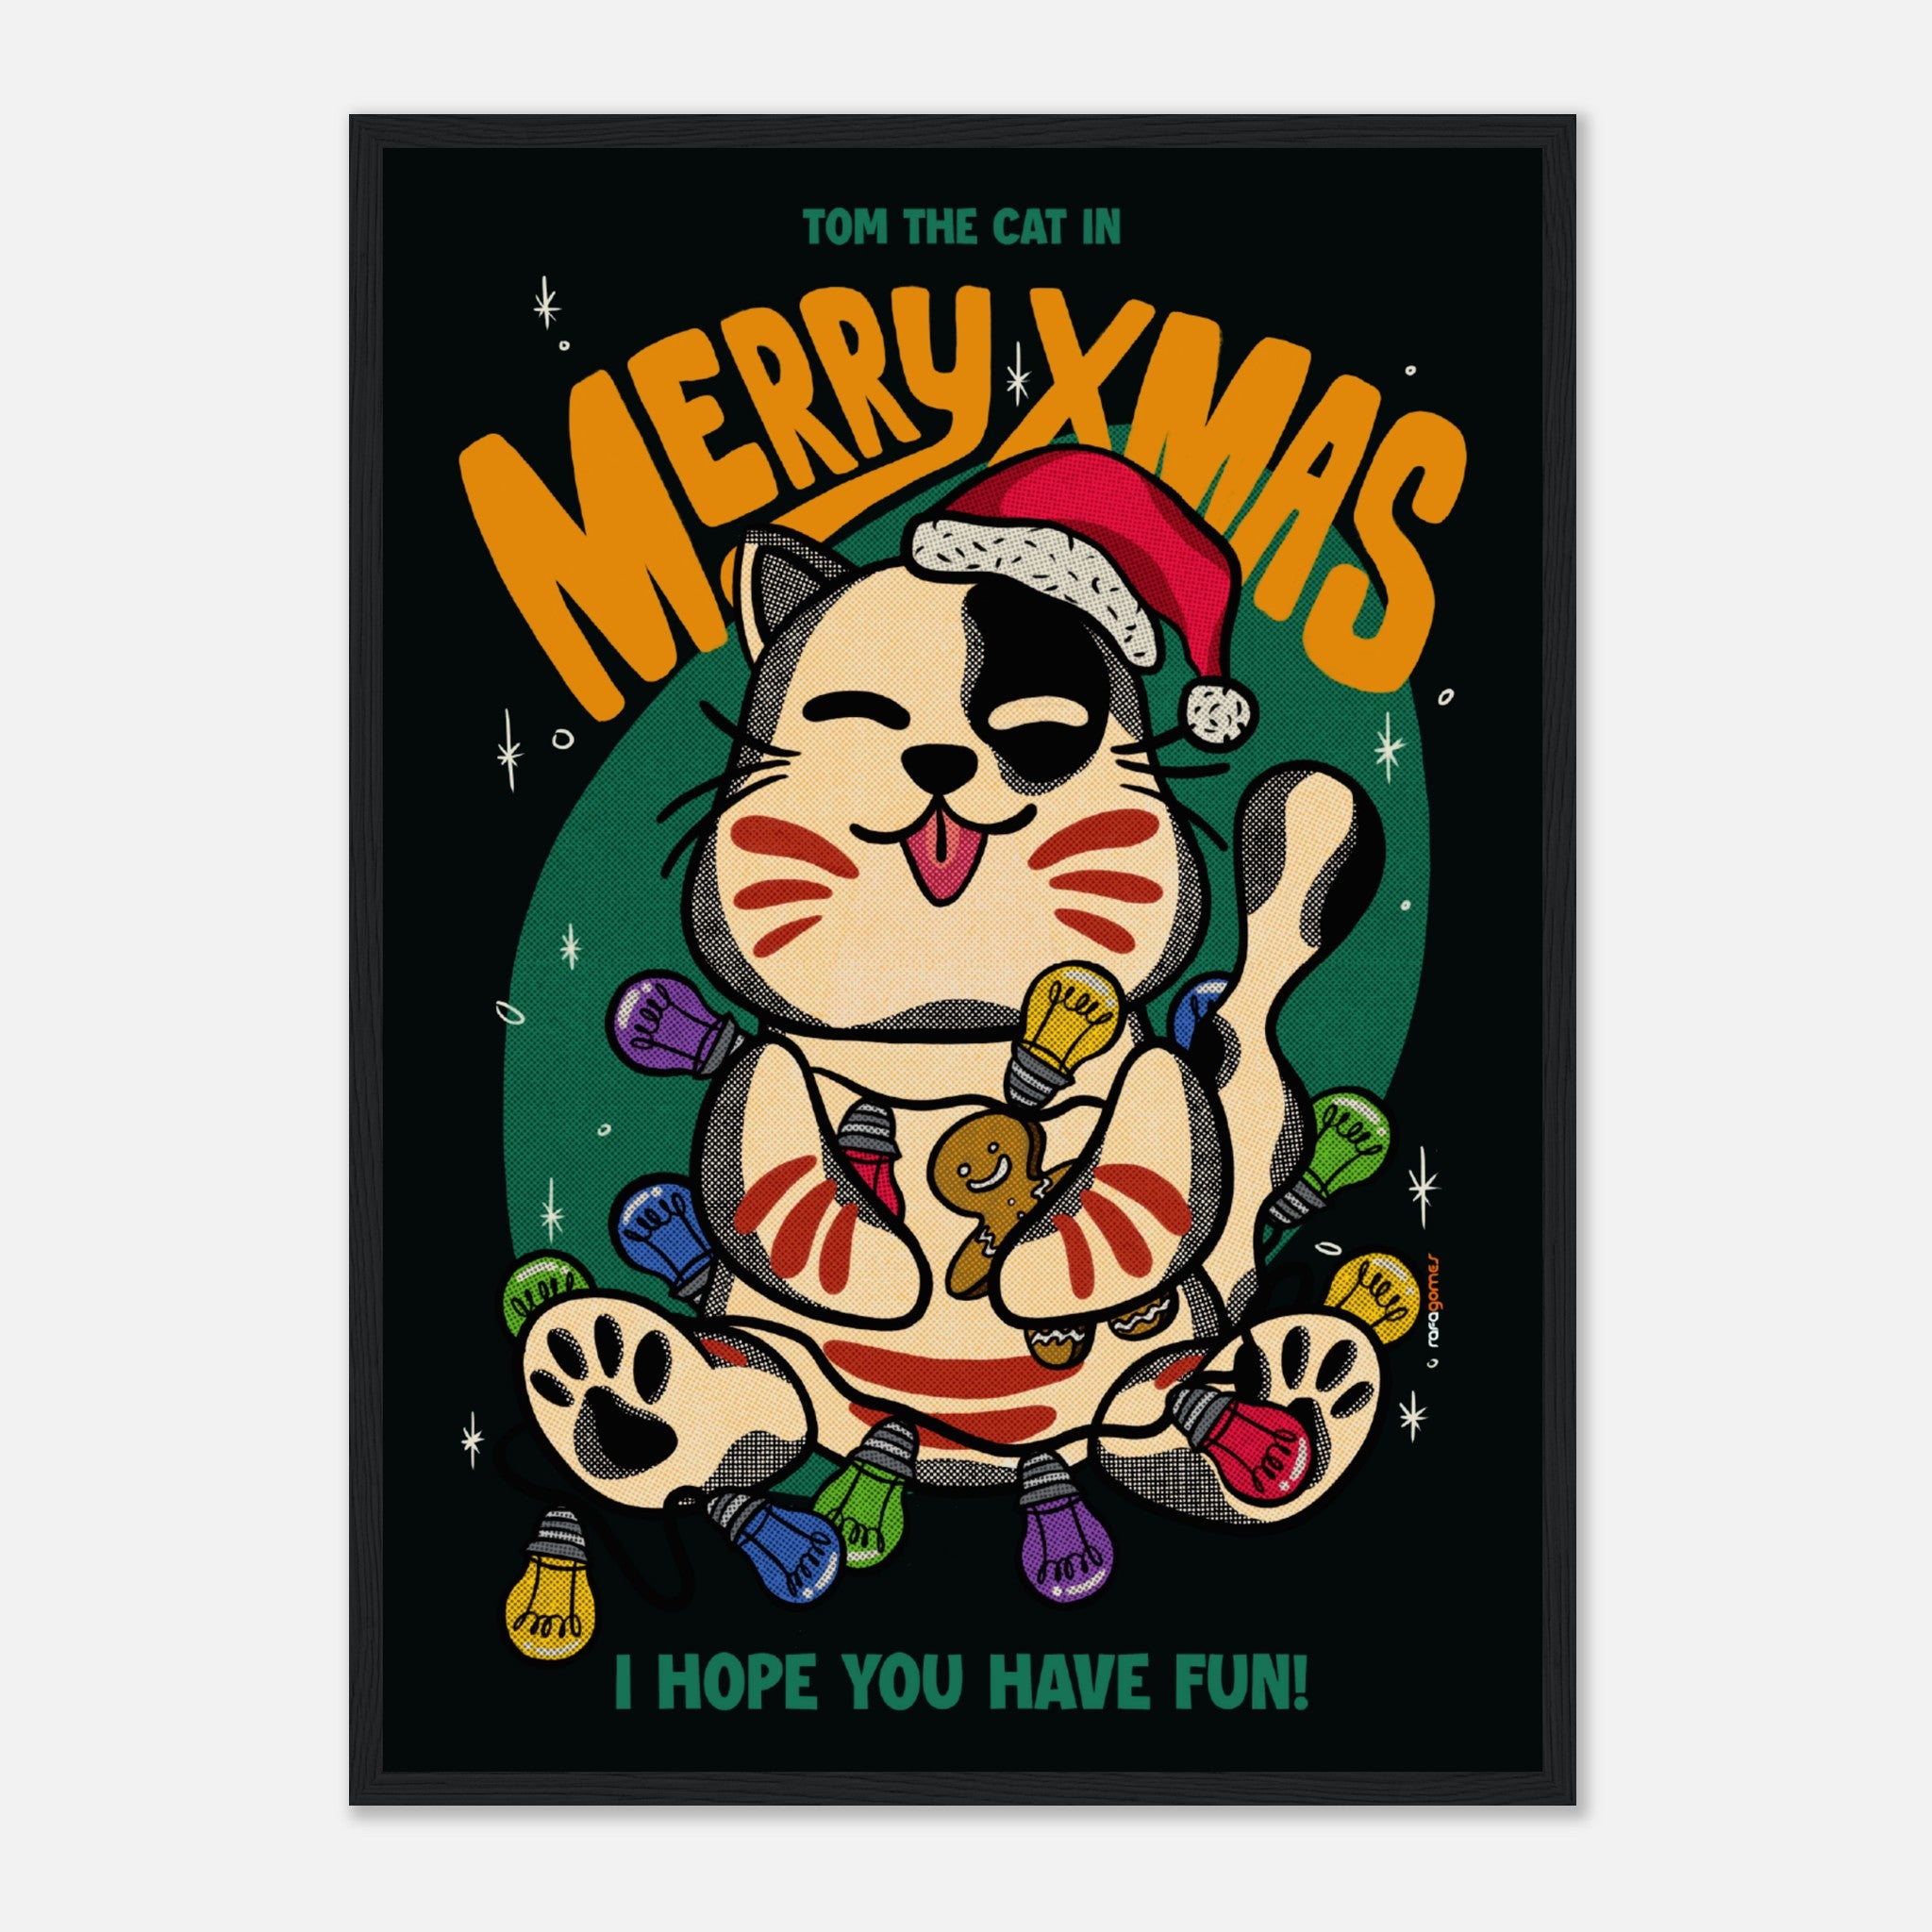 Merry Xmas Poster